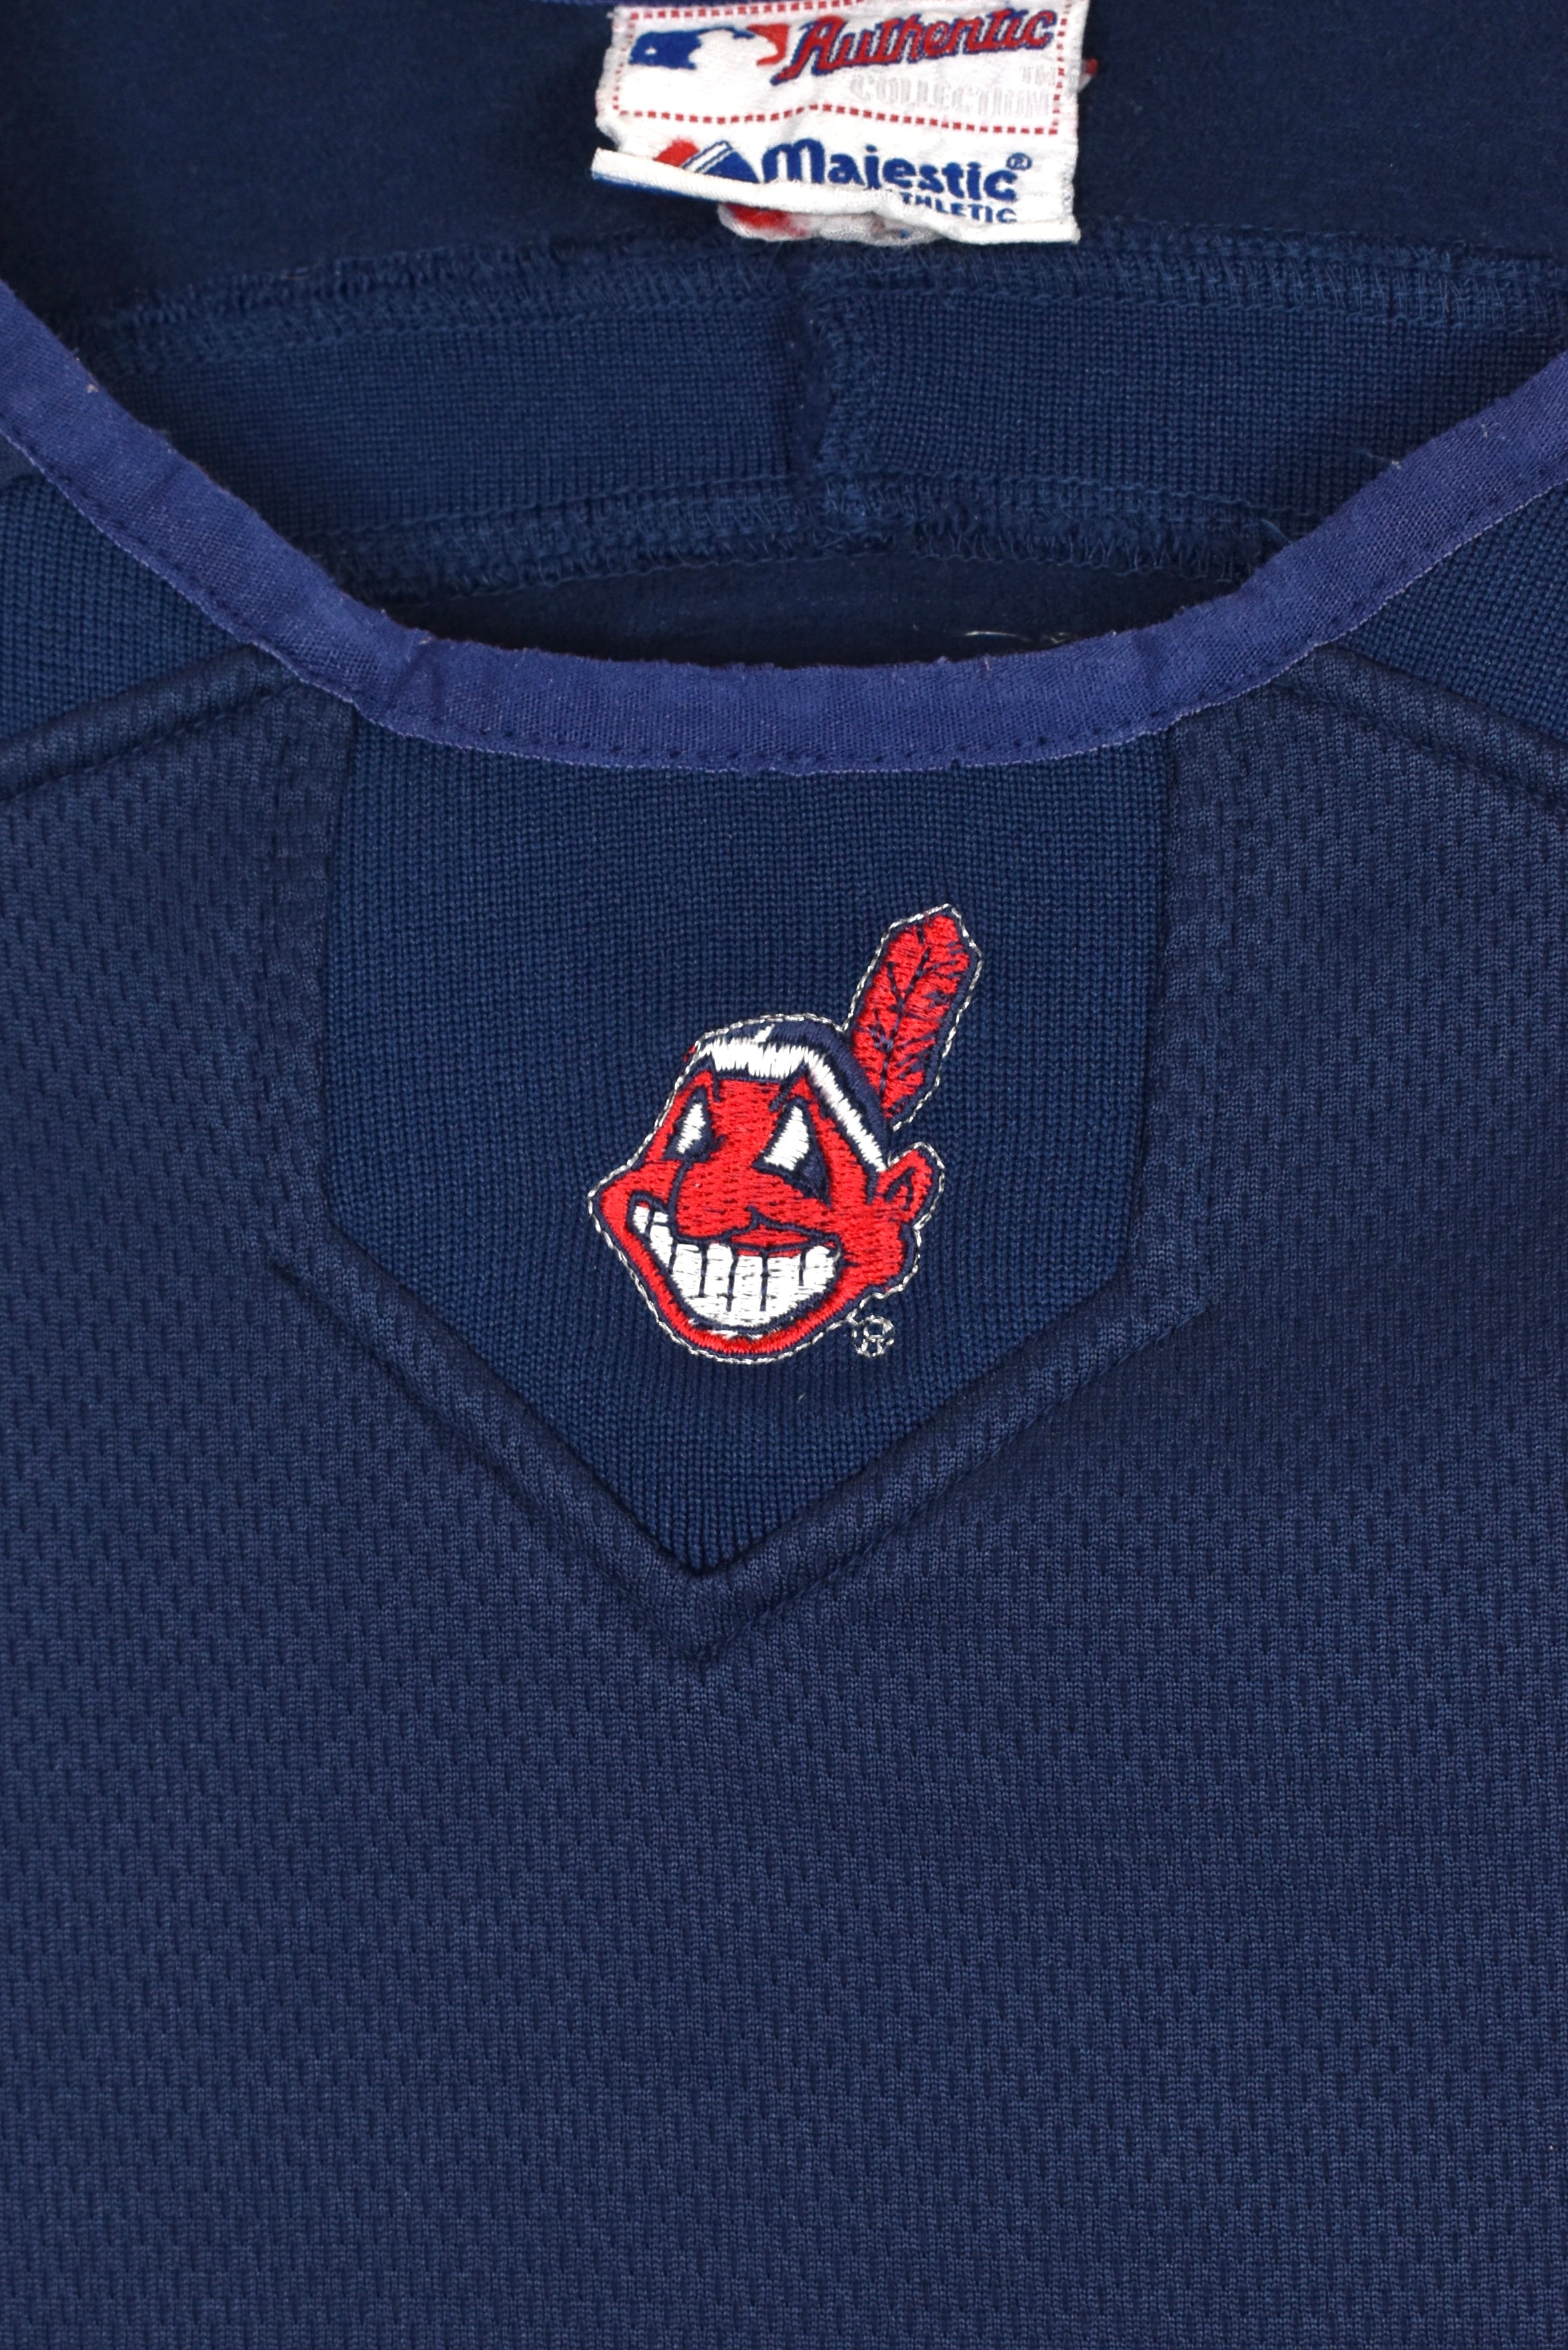 Vintage Cleveland Indians sweatshirt (S), navy embroidered crewneck